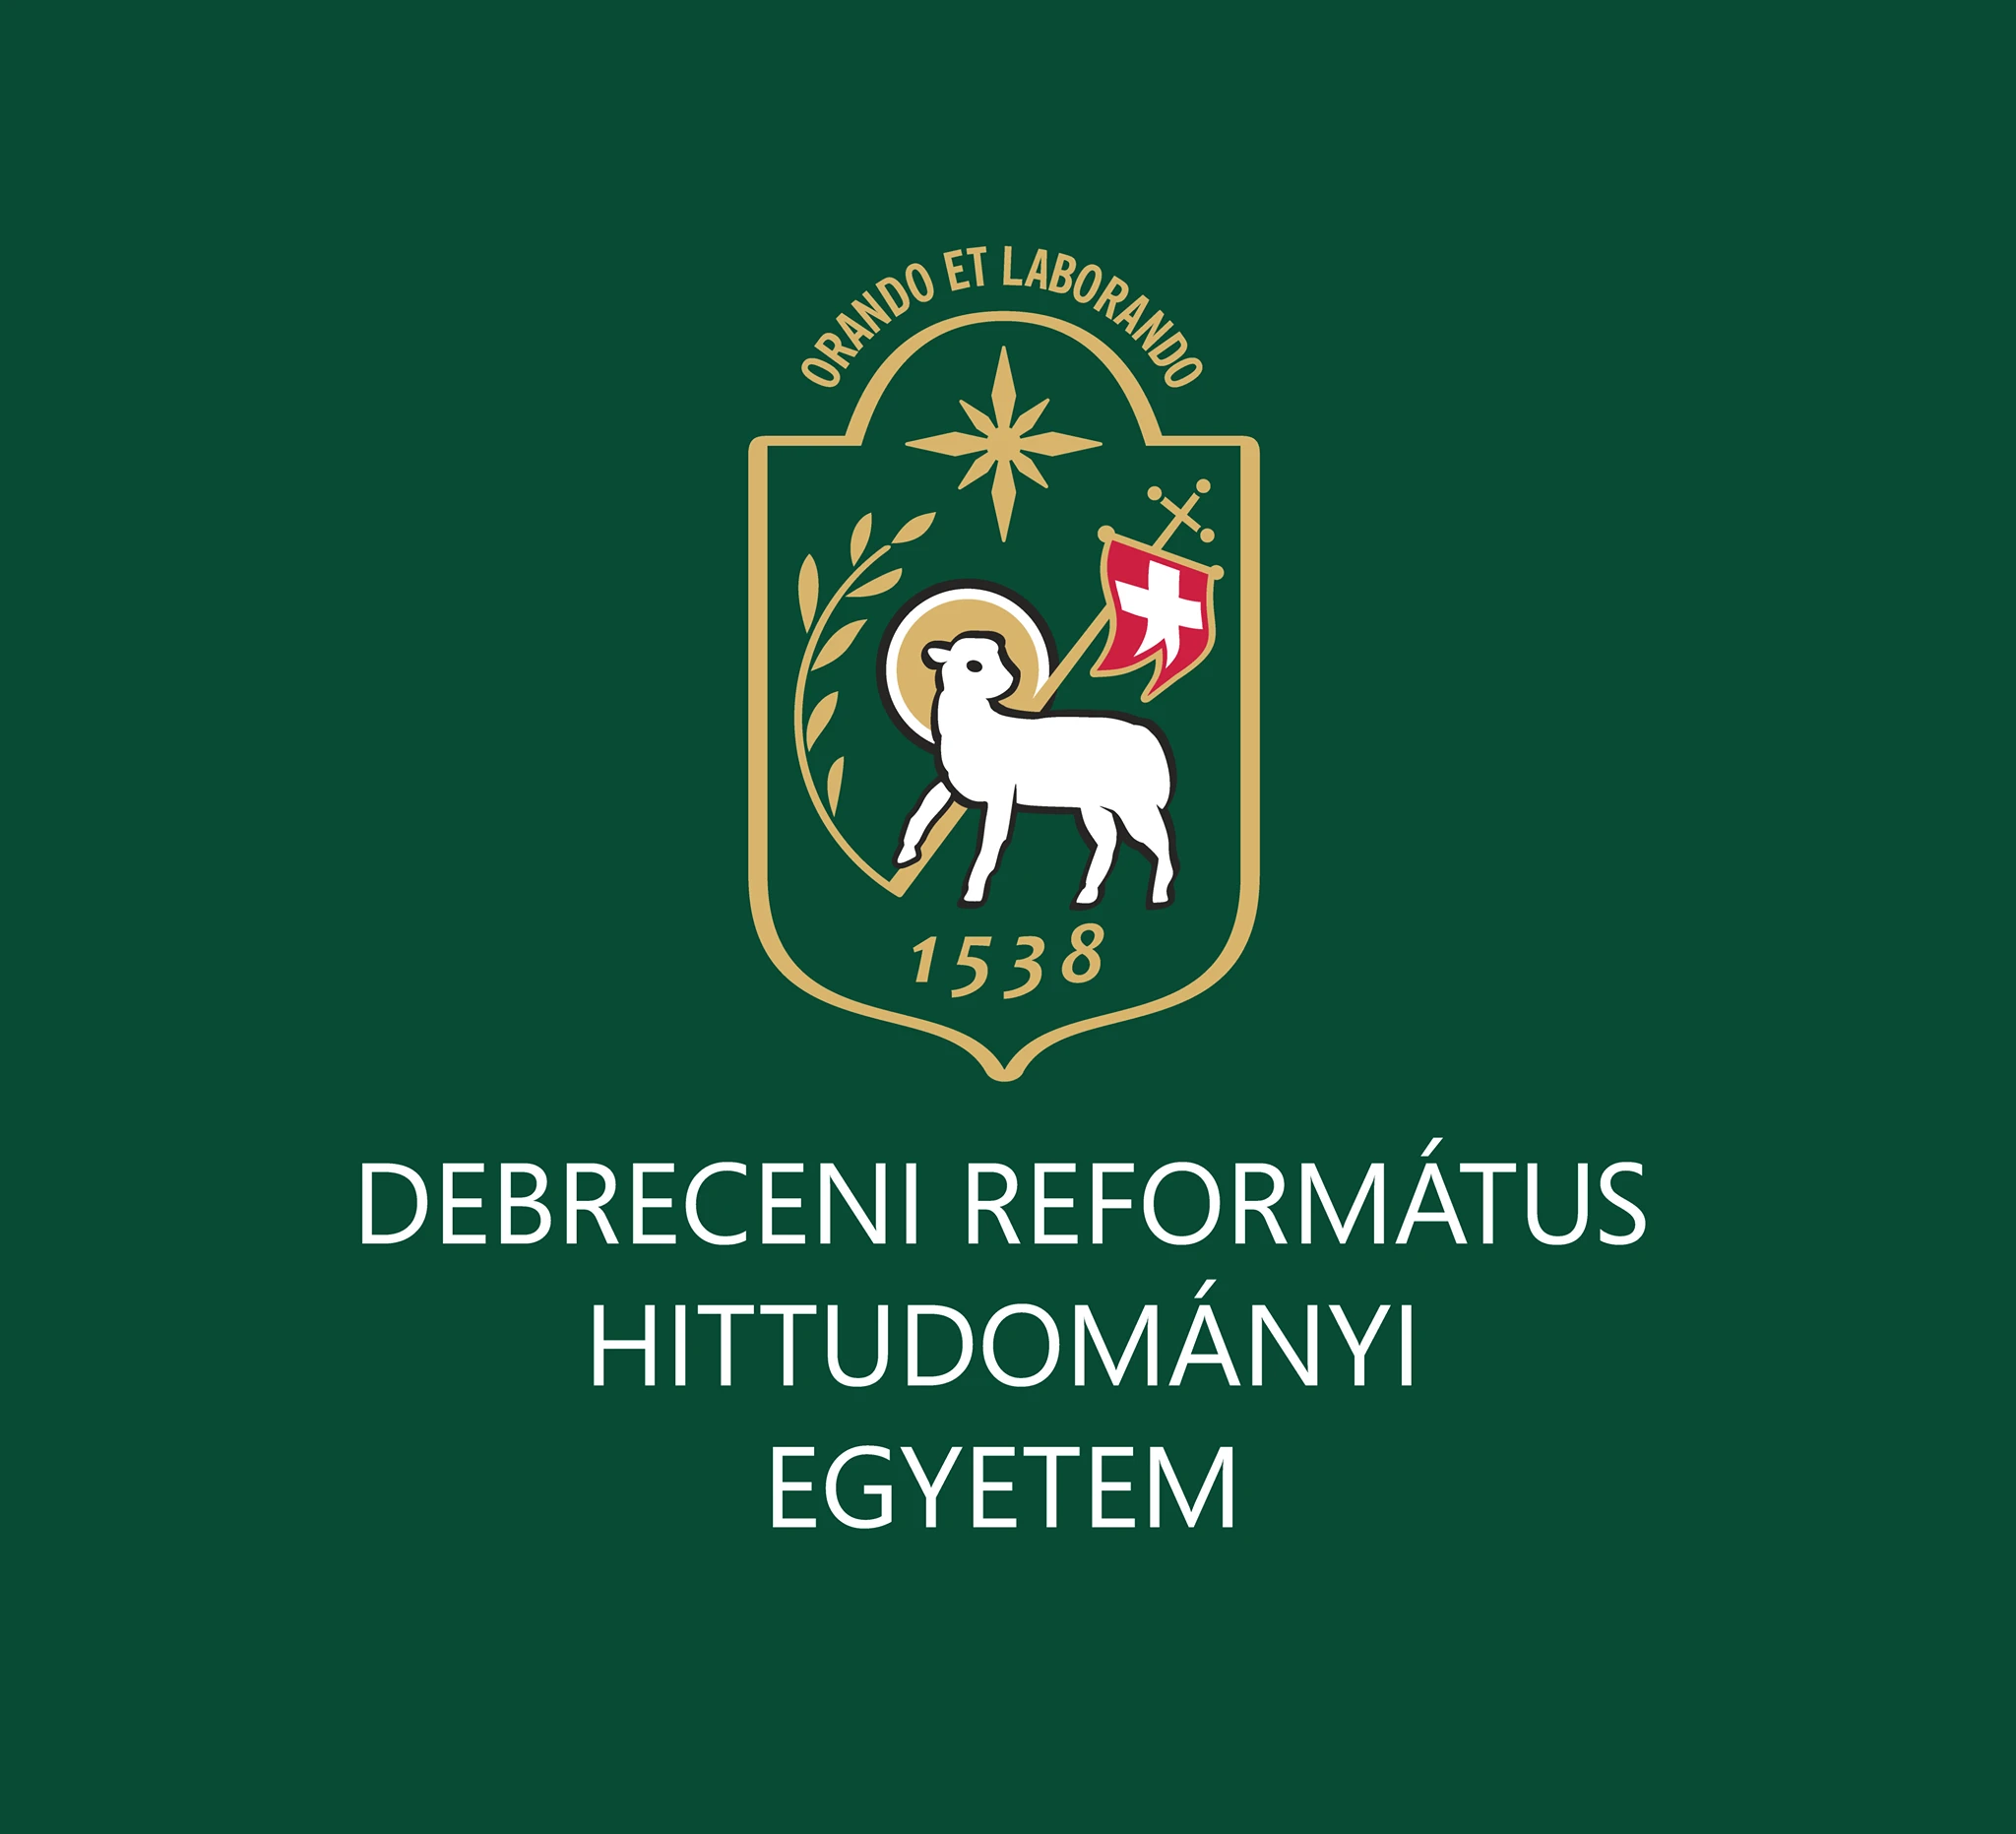 Debreceni Református Hittudományi Egyetem